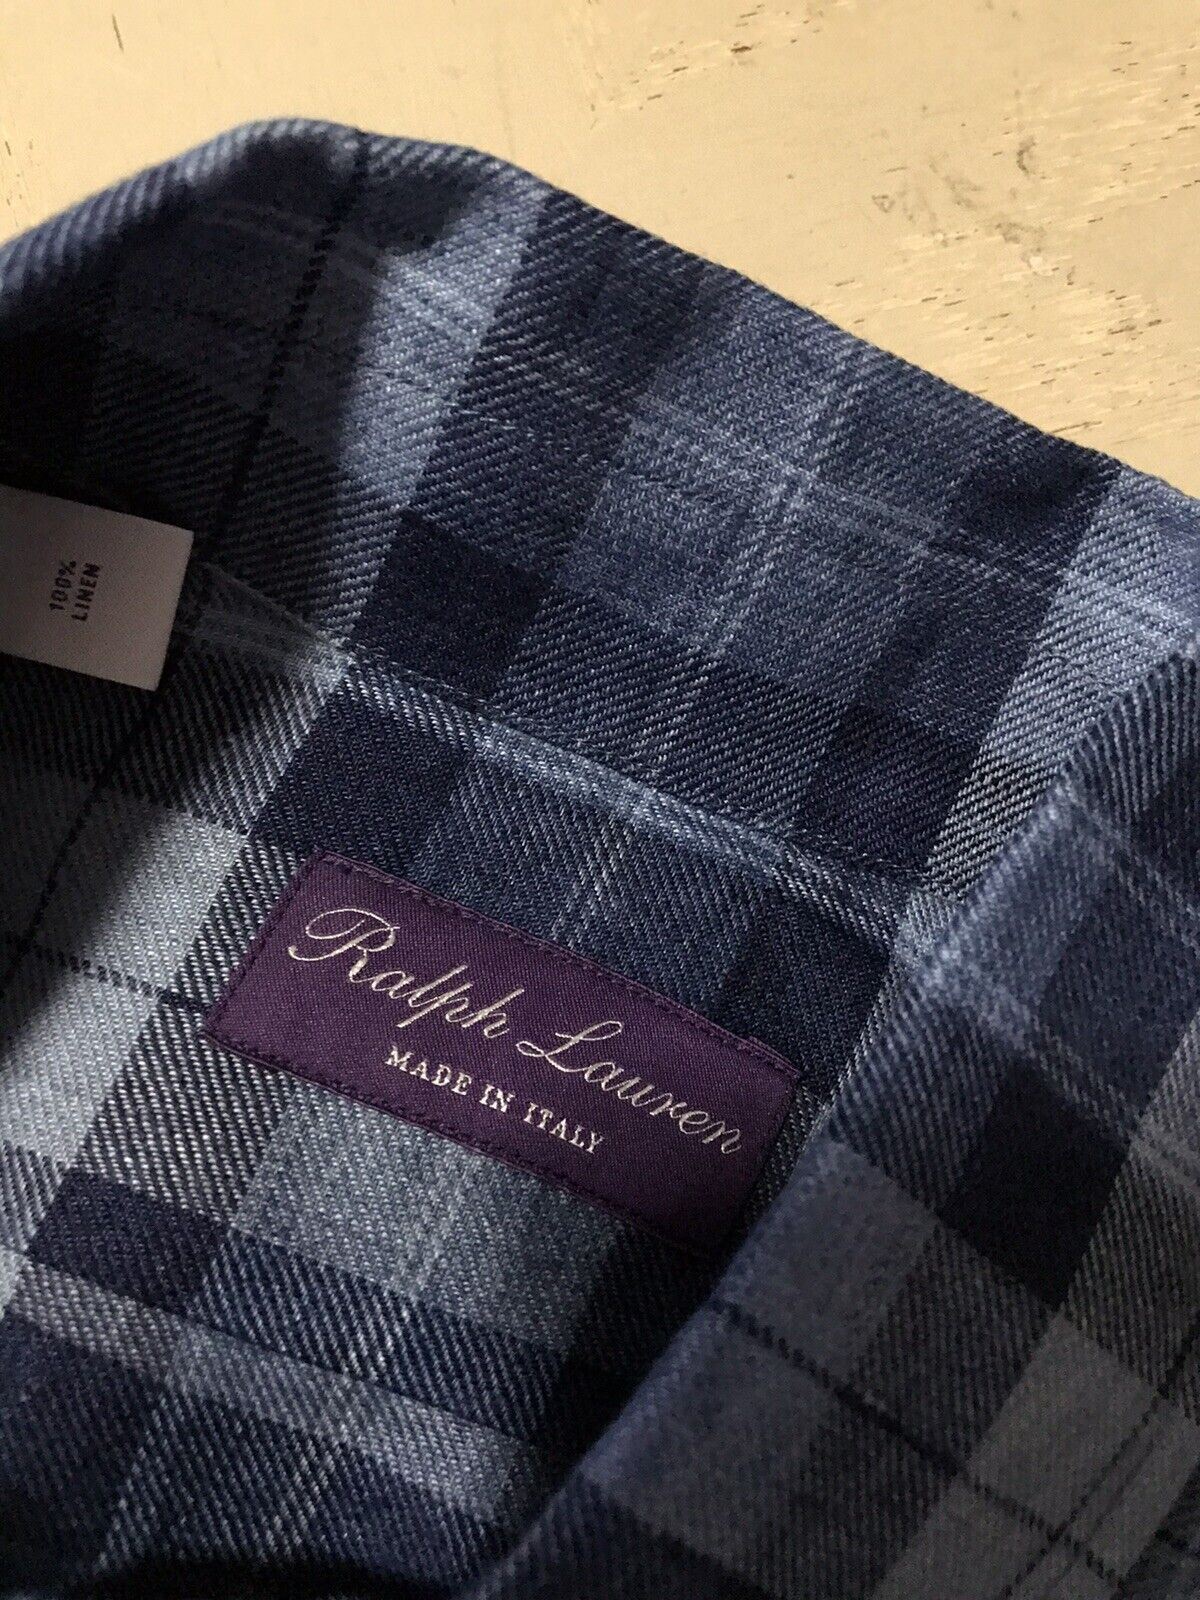 Neu mit Etikett &amp;495 Ralph Lauren Purple Label Herren kariertes Leinenhemd, Marineblau, S, Italien